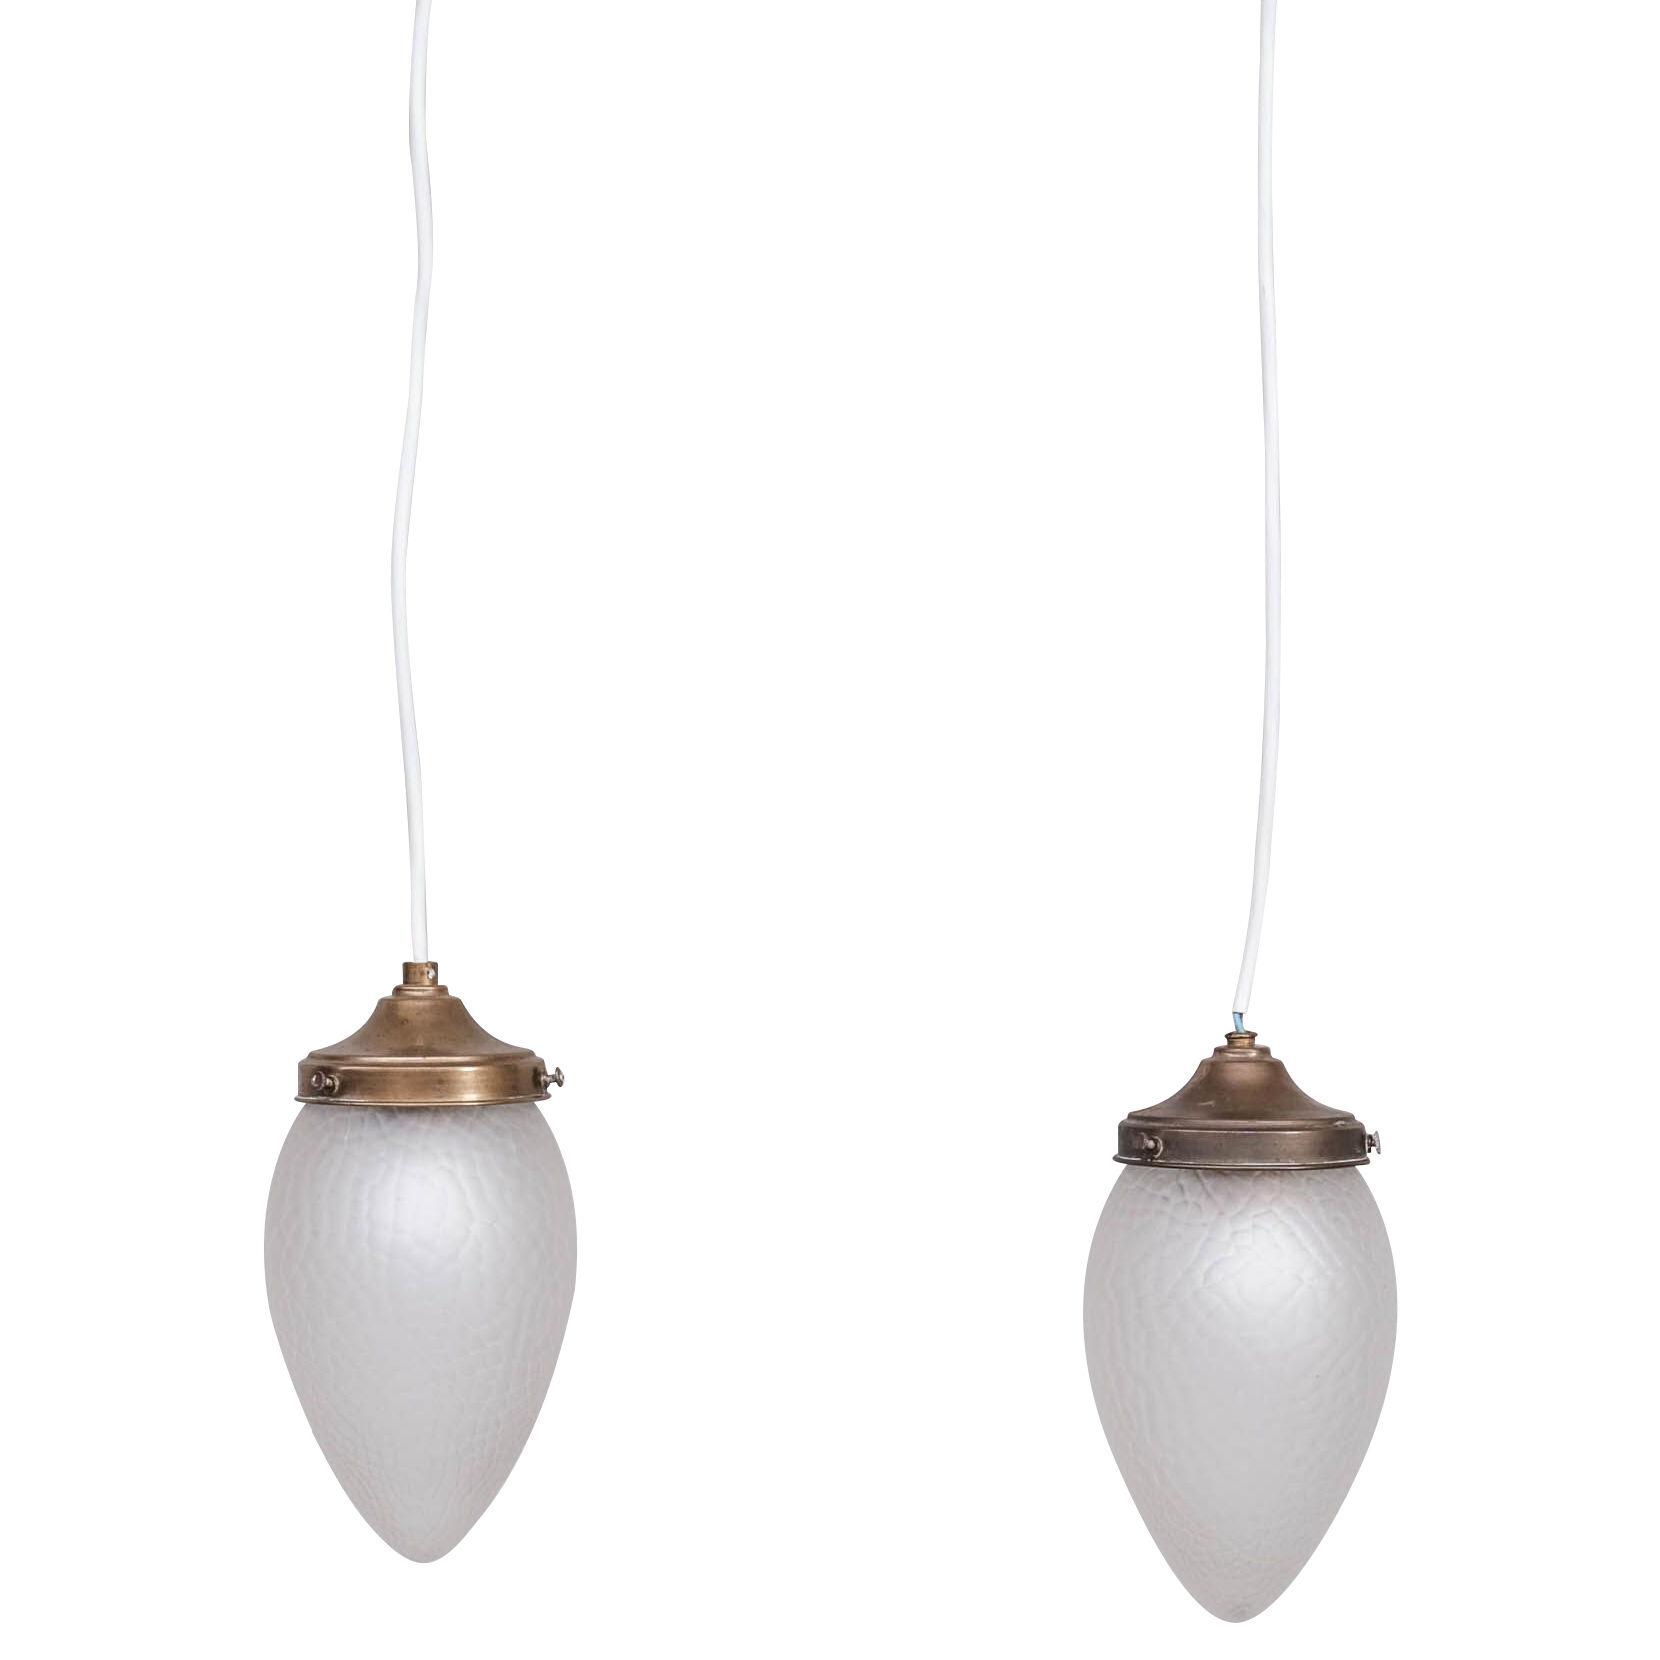 Pair of Glass and Brass Swedish Pendant Lights